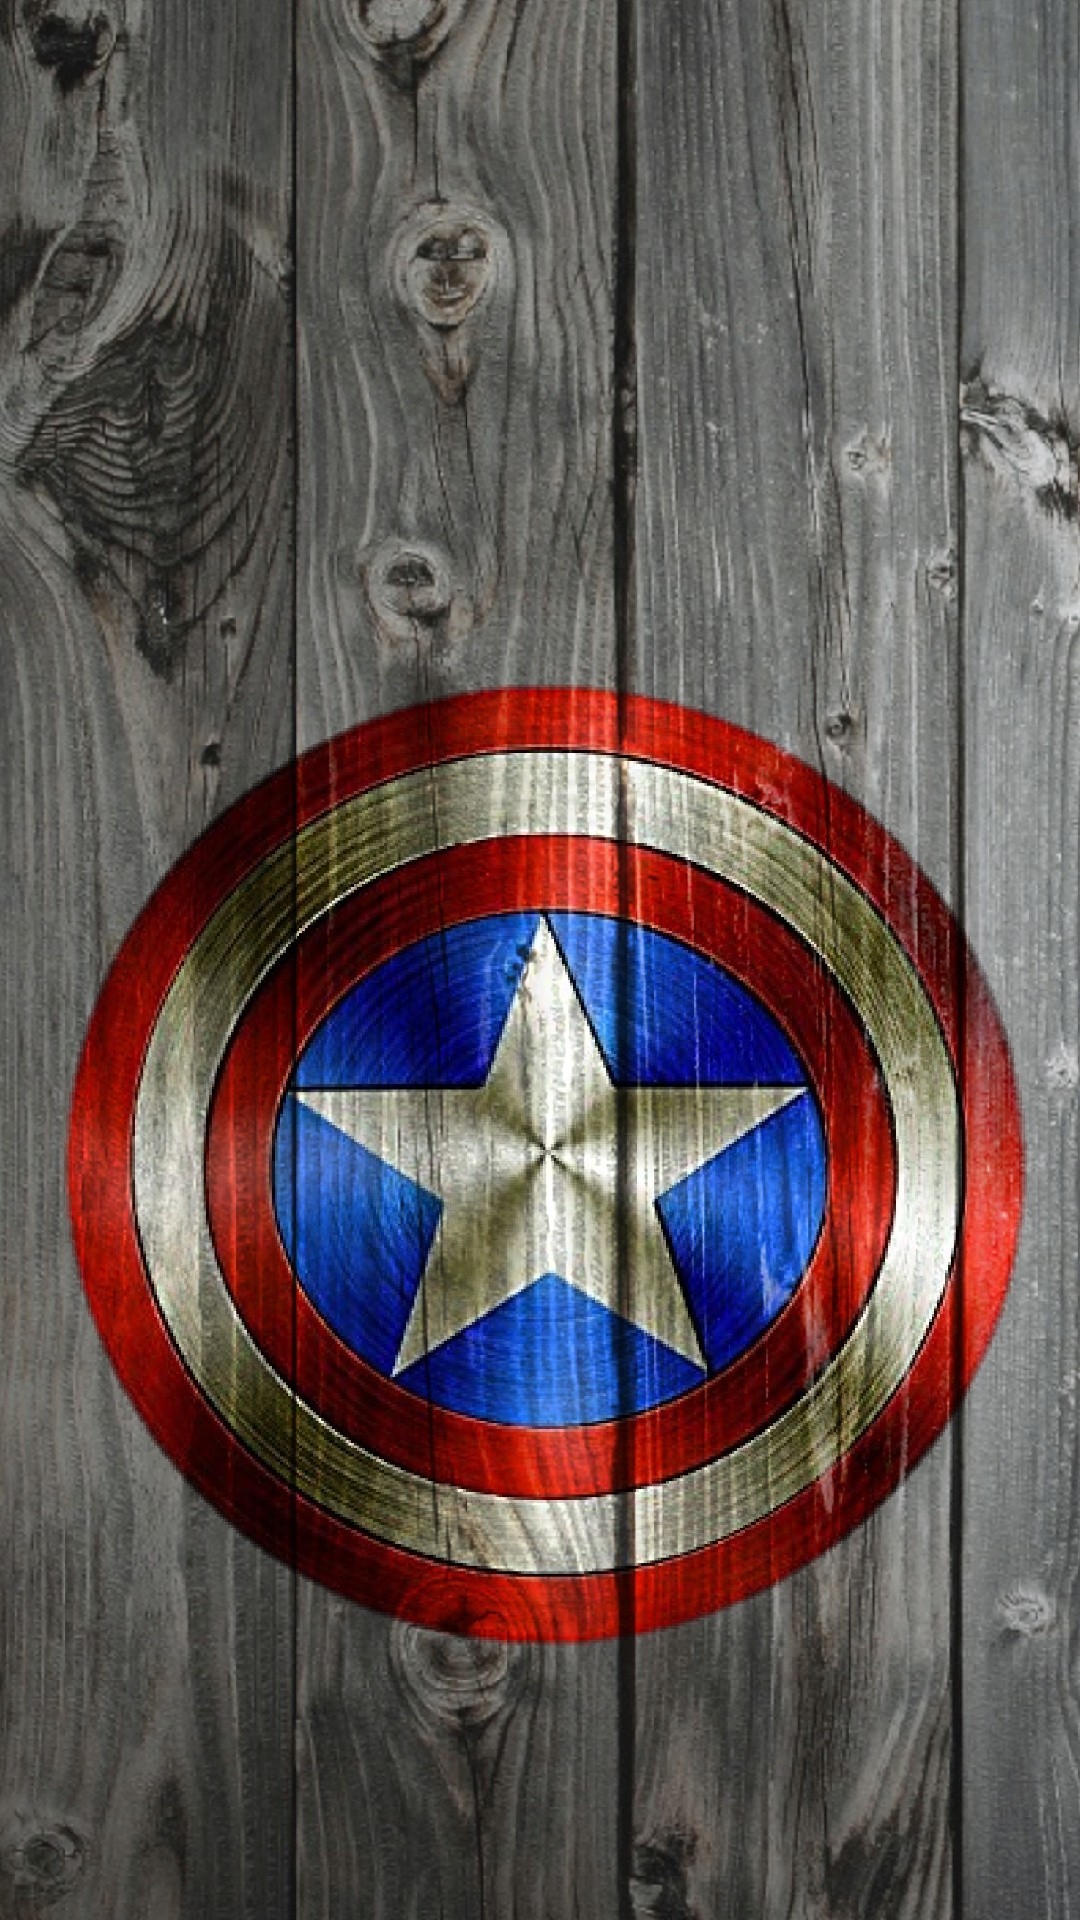 Best Captain america iPhone HD Wallpapers - iLikeWallpaper